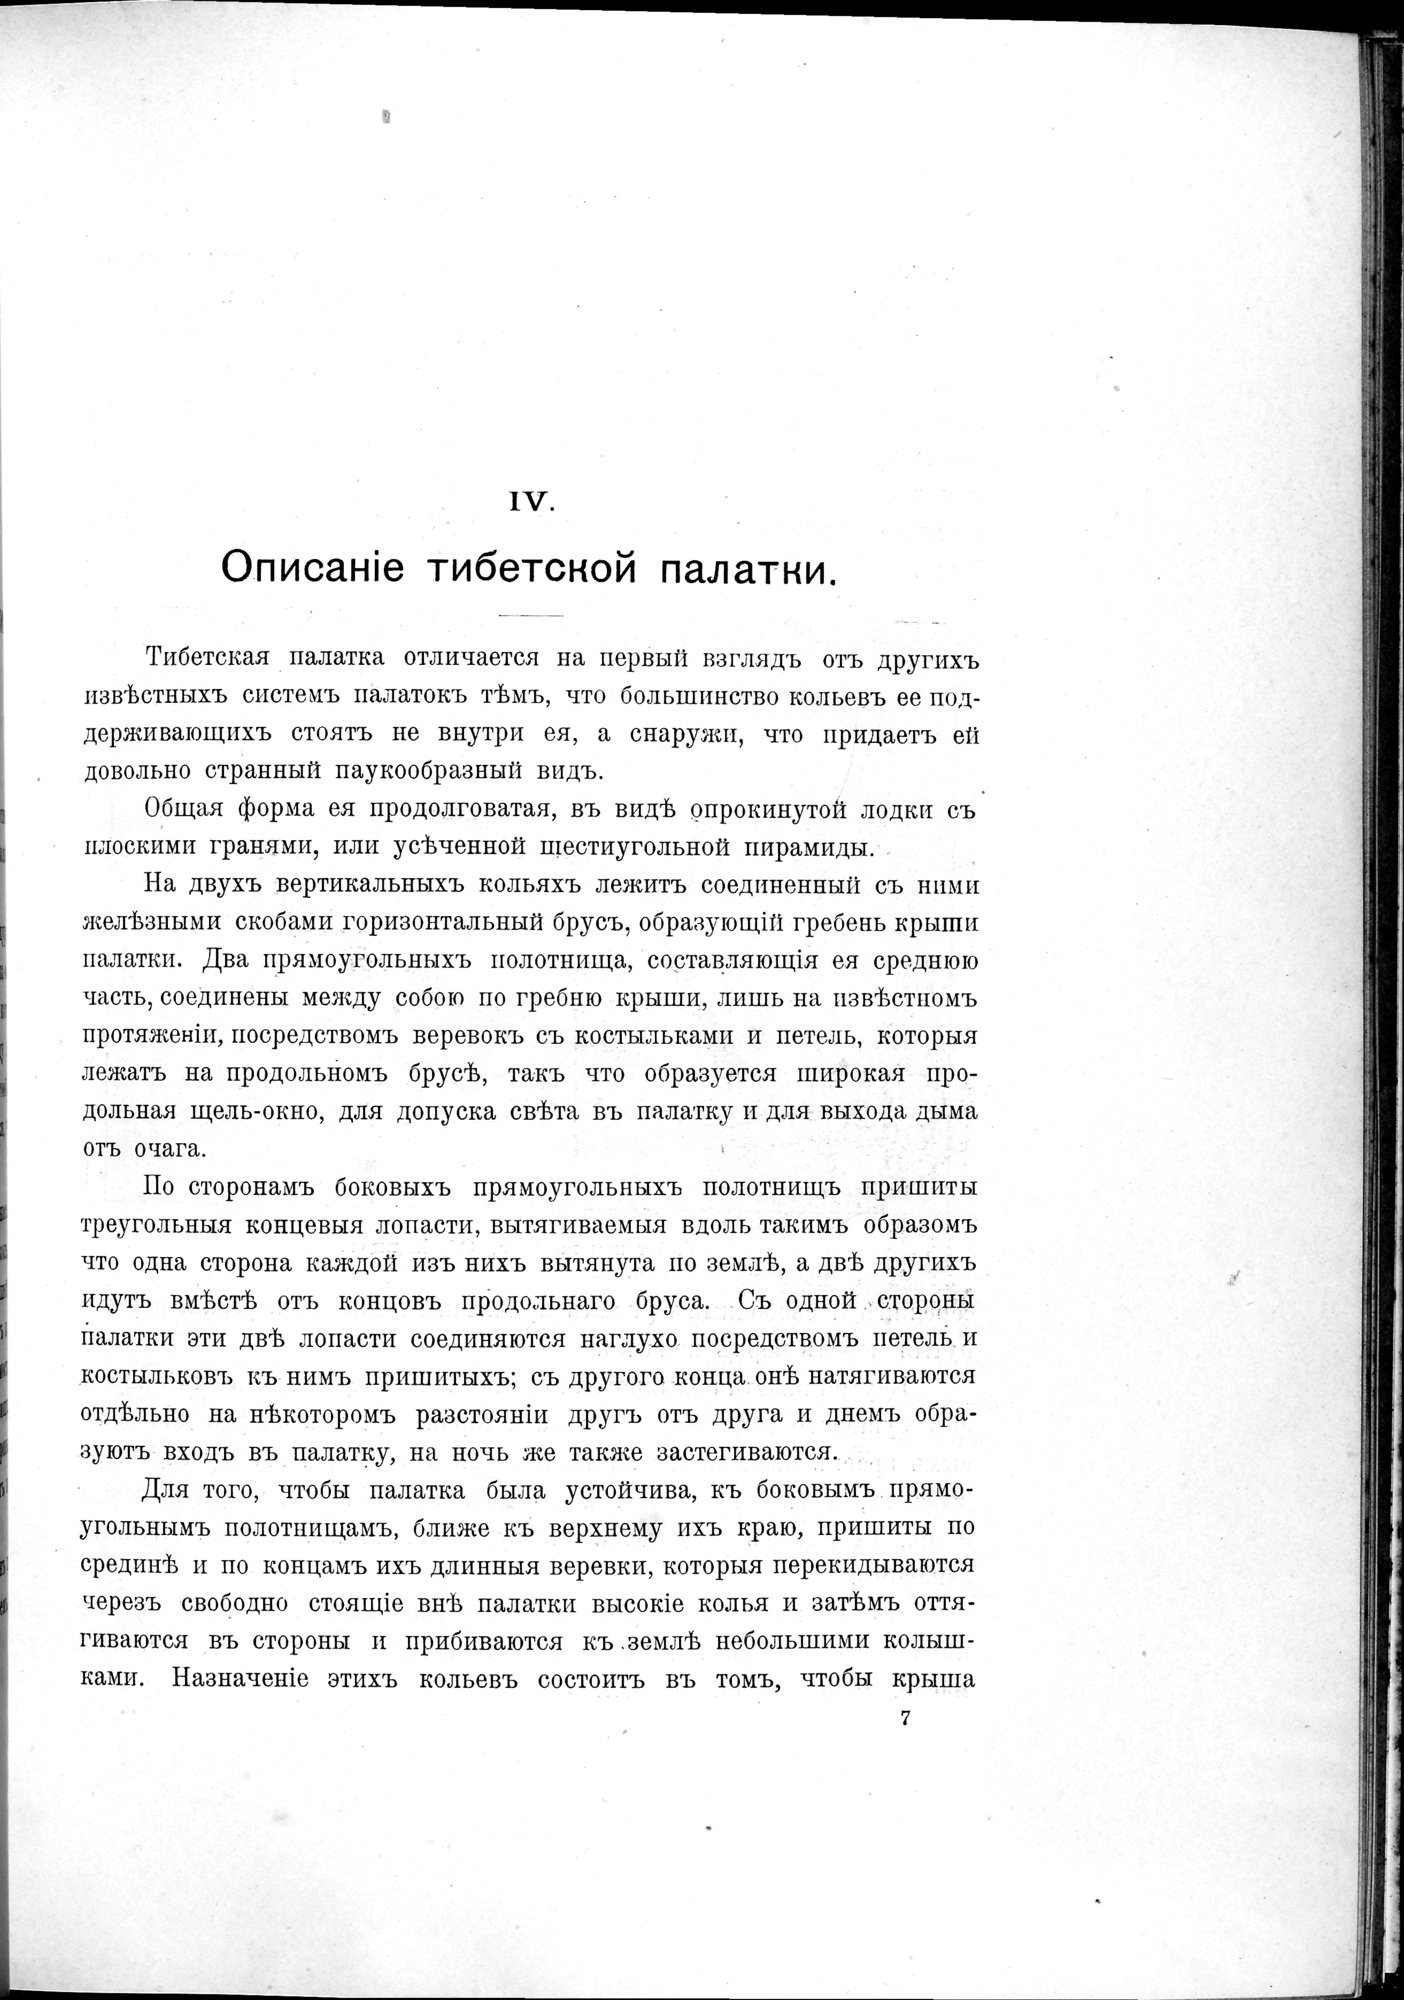 Mongoliia i Kam : vol.3 / Page 127 (Grayscale High Resolution Image)